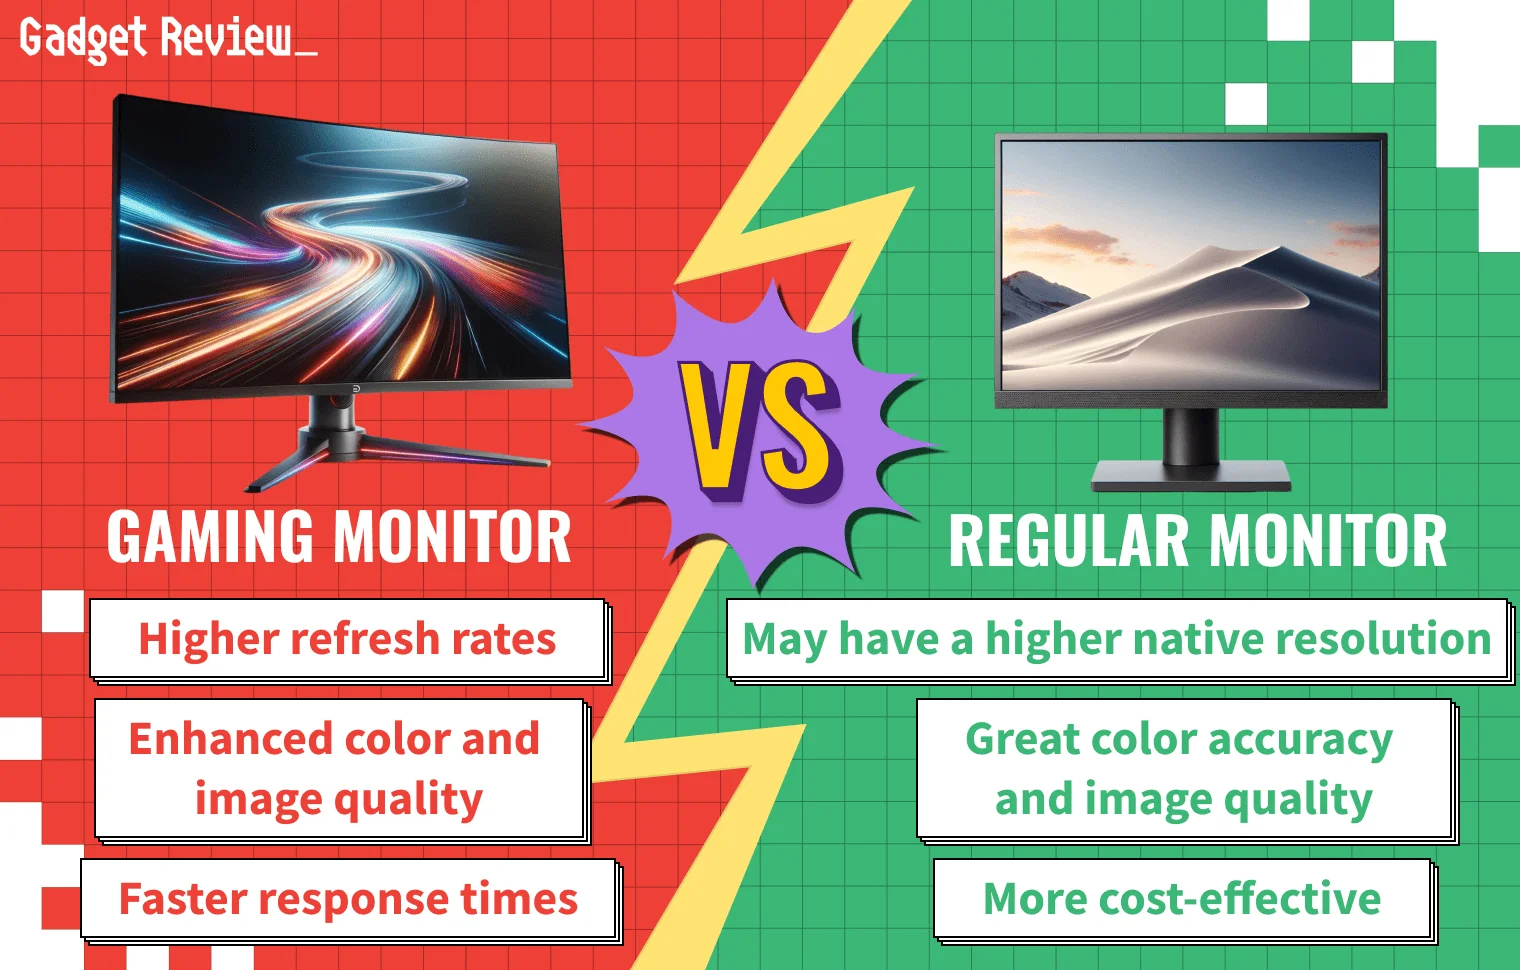 Gaming Monitors vs Regular Monitors